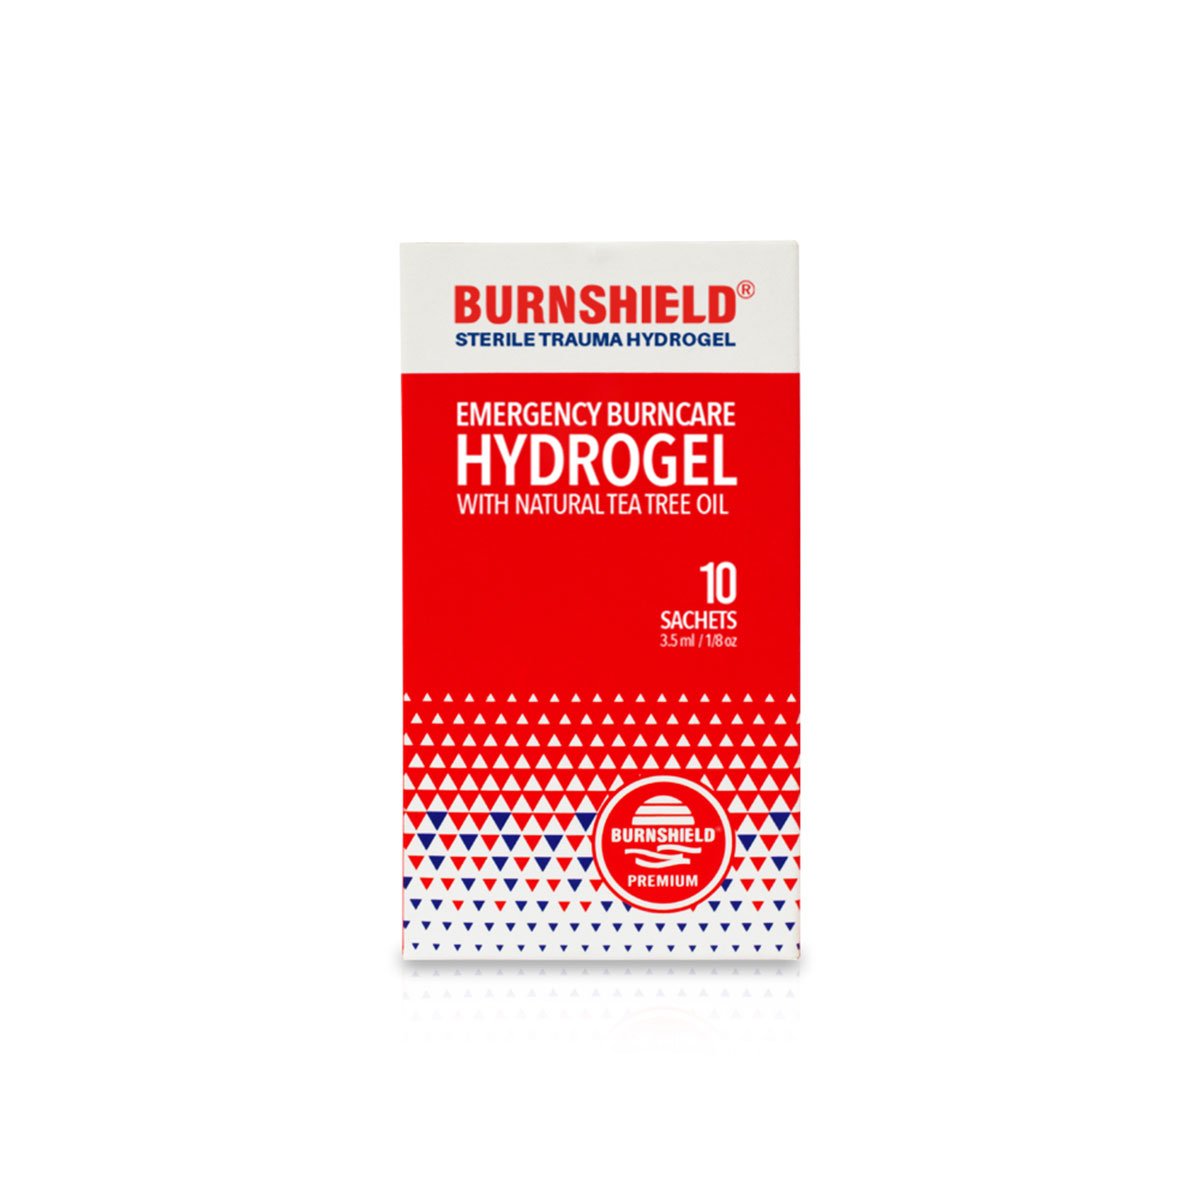 Burnshield 10 pack 3.5ml hydrogel sachets